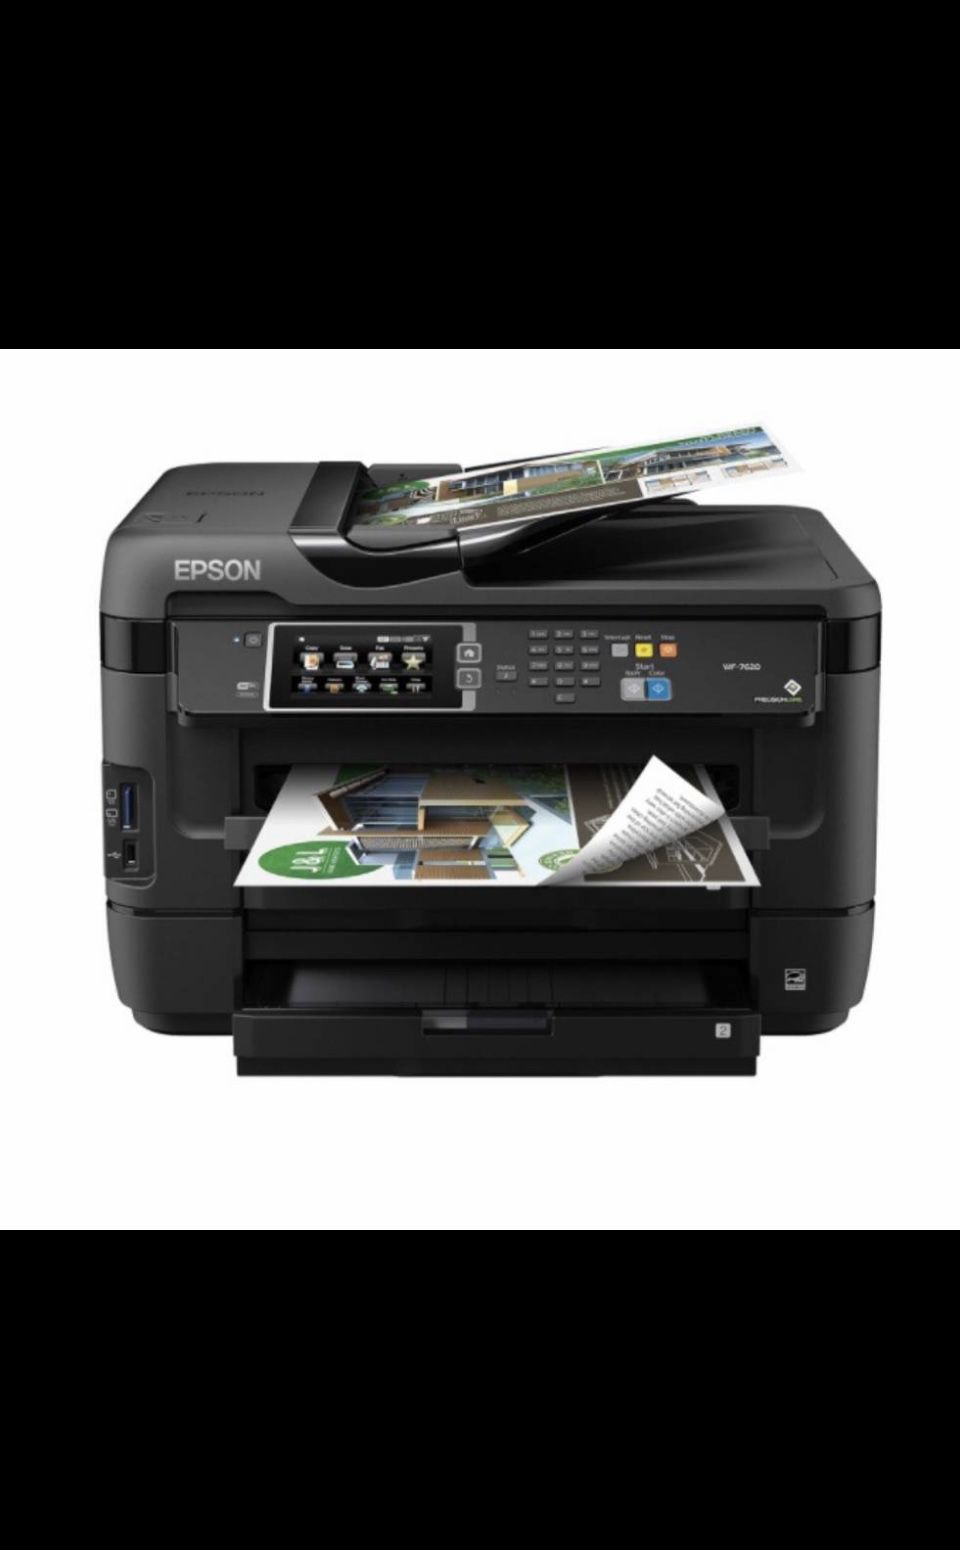 Epson WF-7610 Wireless Color Printer, Copier, Scanner, New in Unopened Box